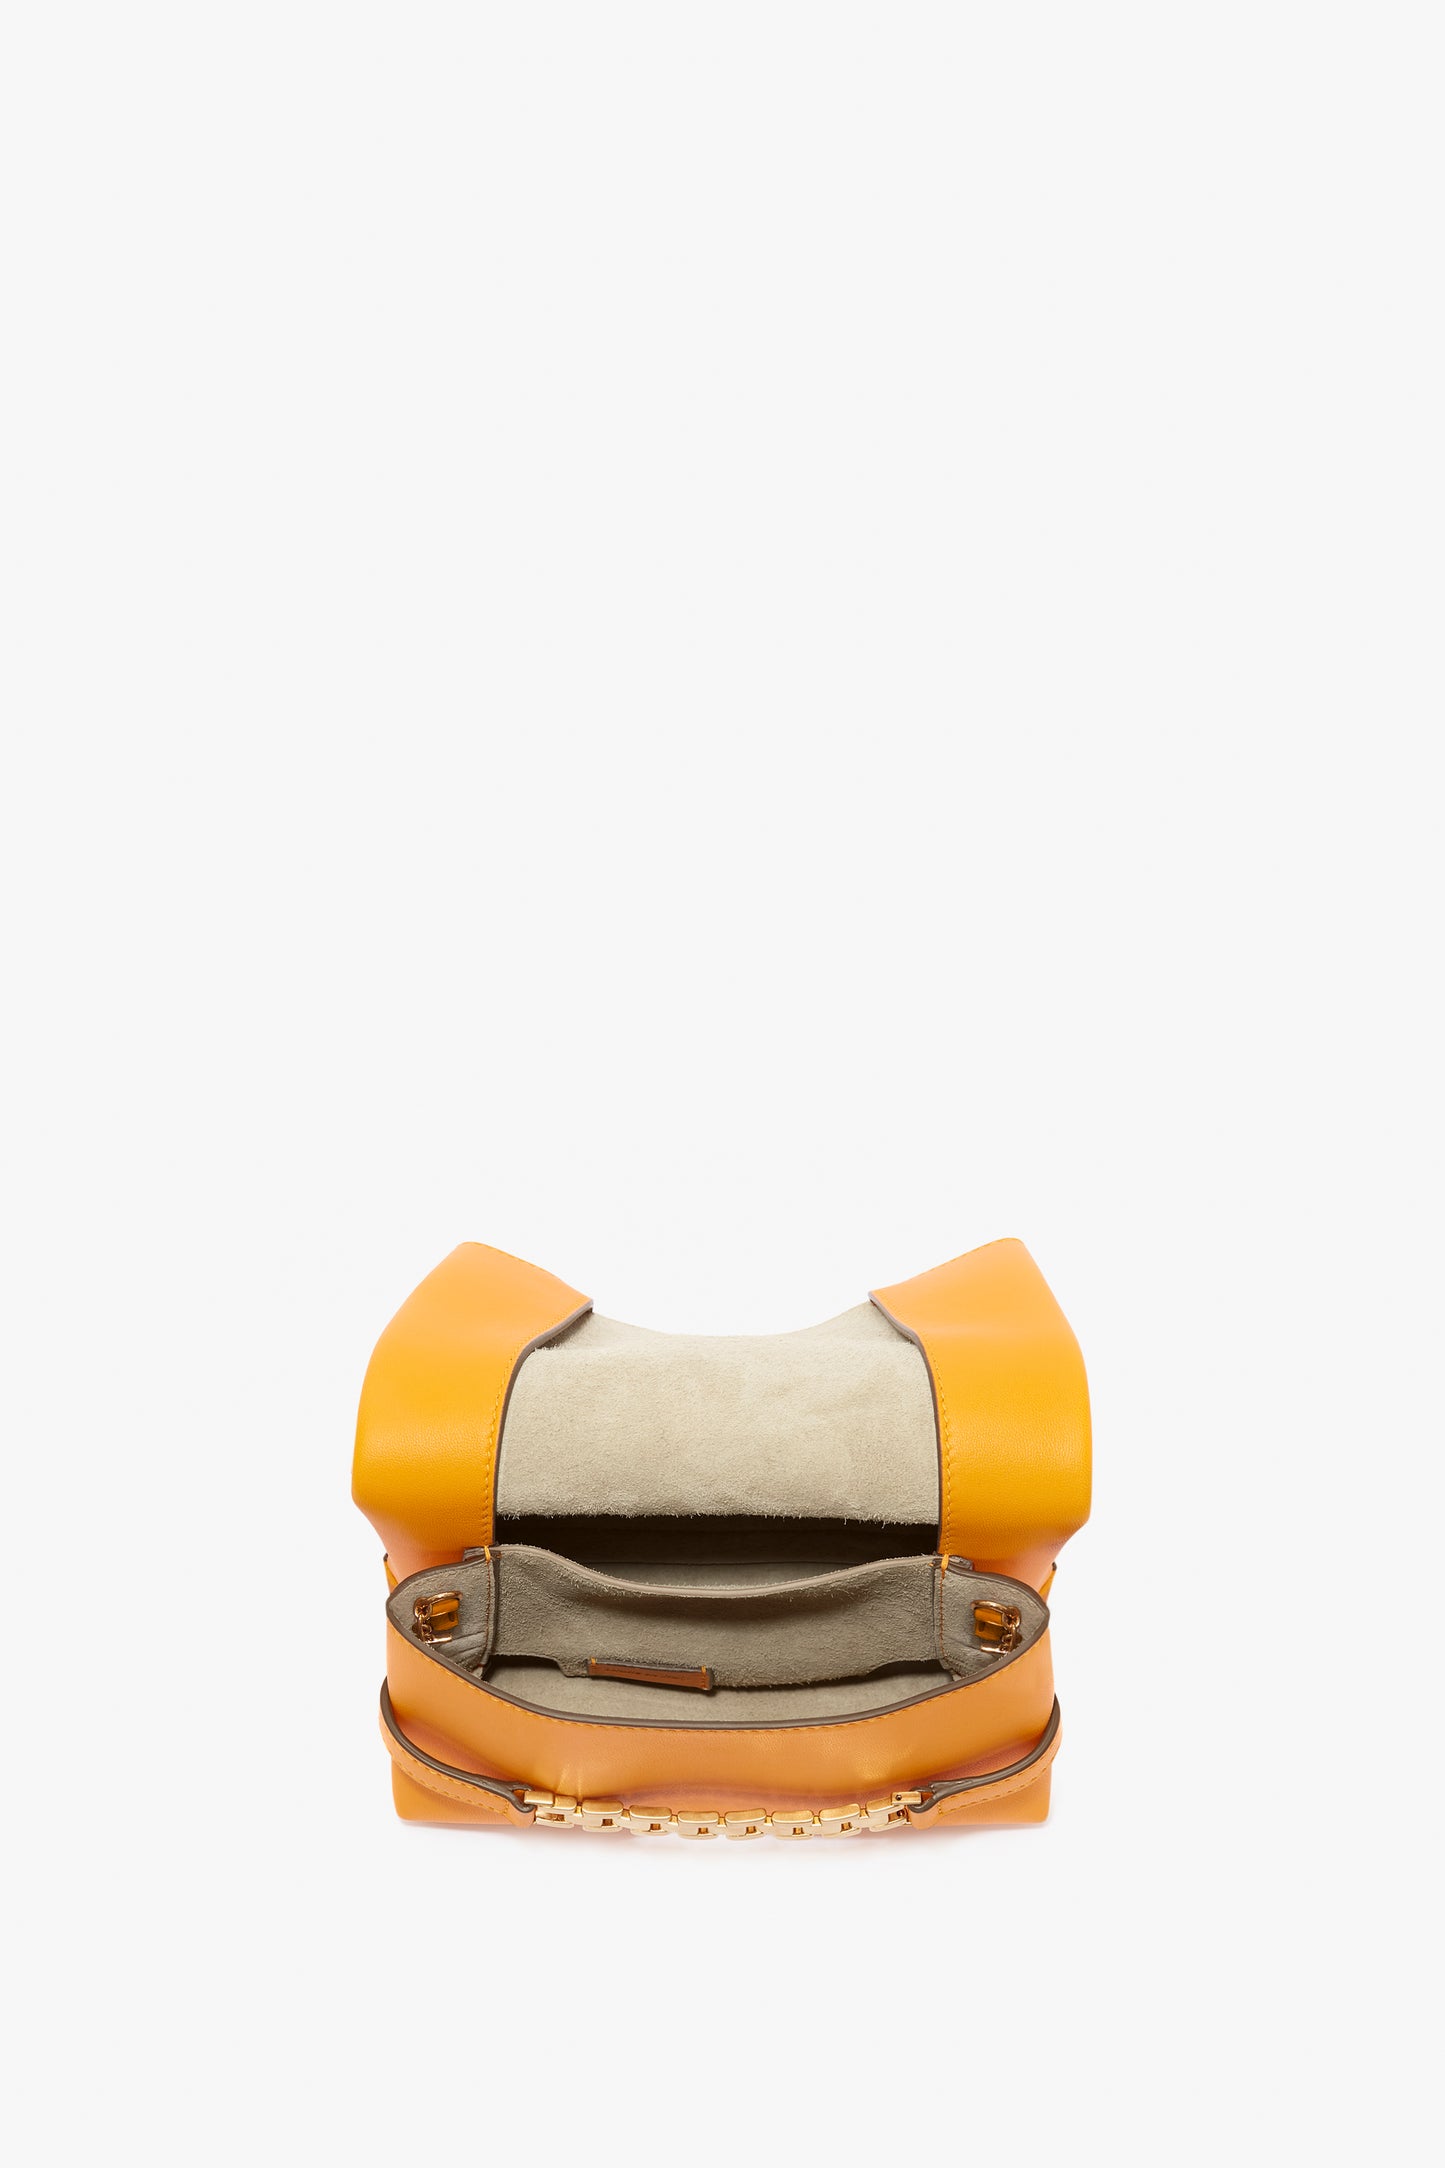 Mini Chain Pouch in Mandarin Leather